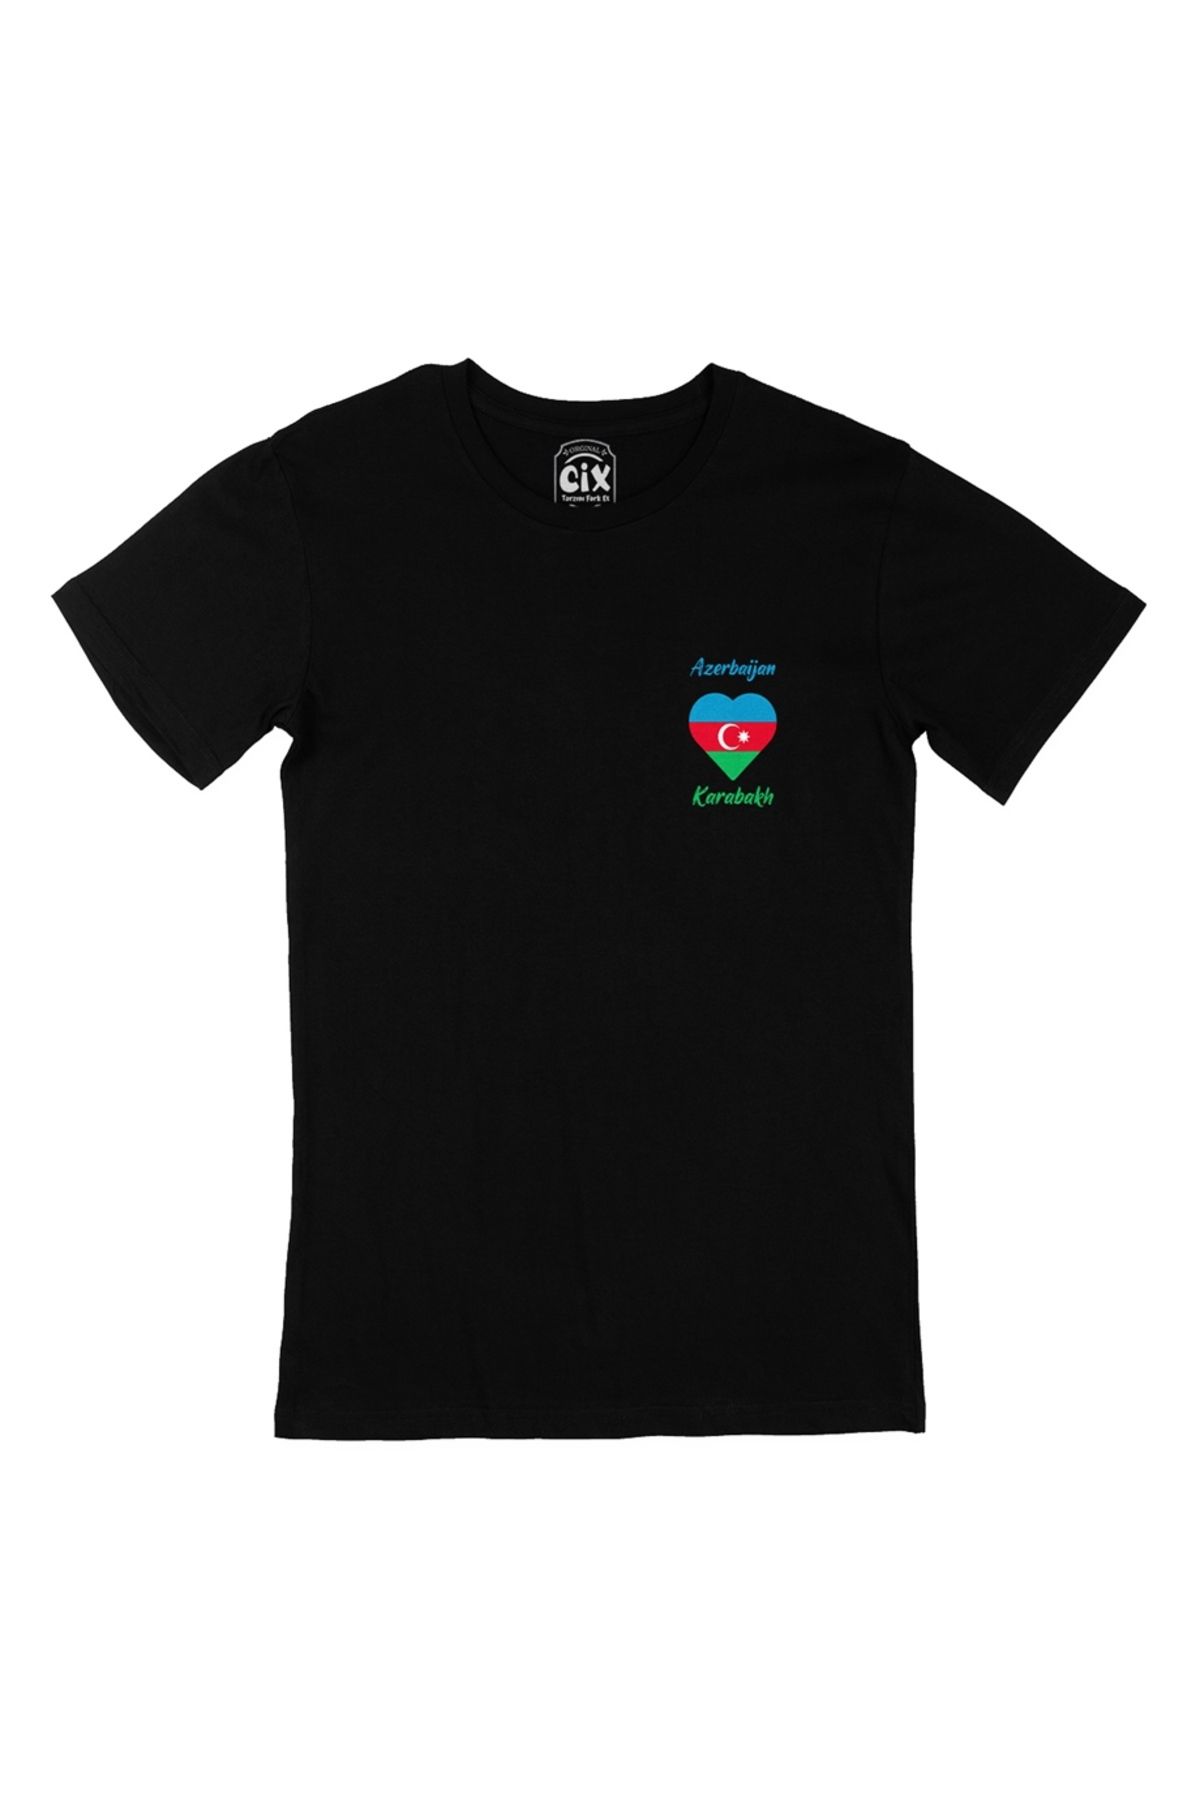 Cix Karabağ Azerbaycan Bayraklı Kalpli Cep Logo Tasarımlı Siyah Tişört